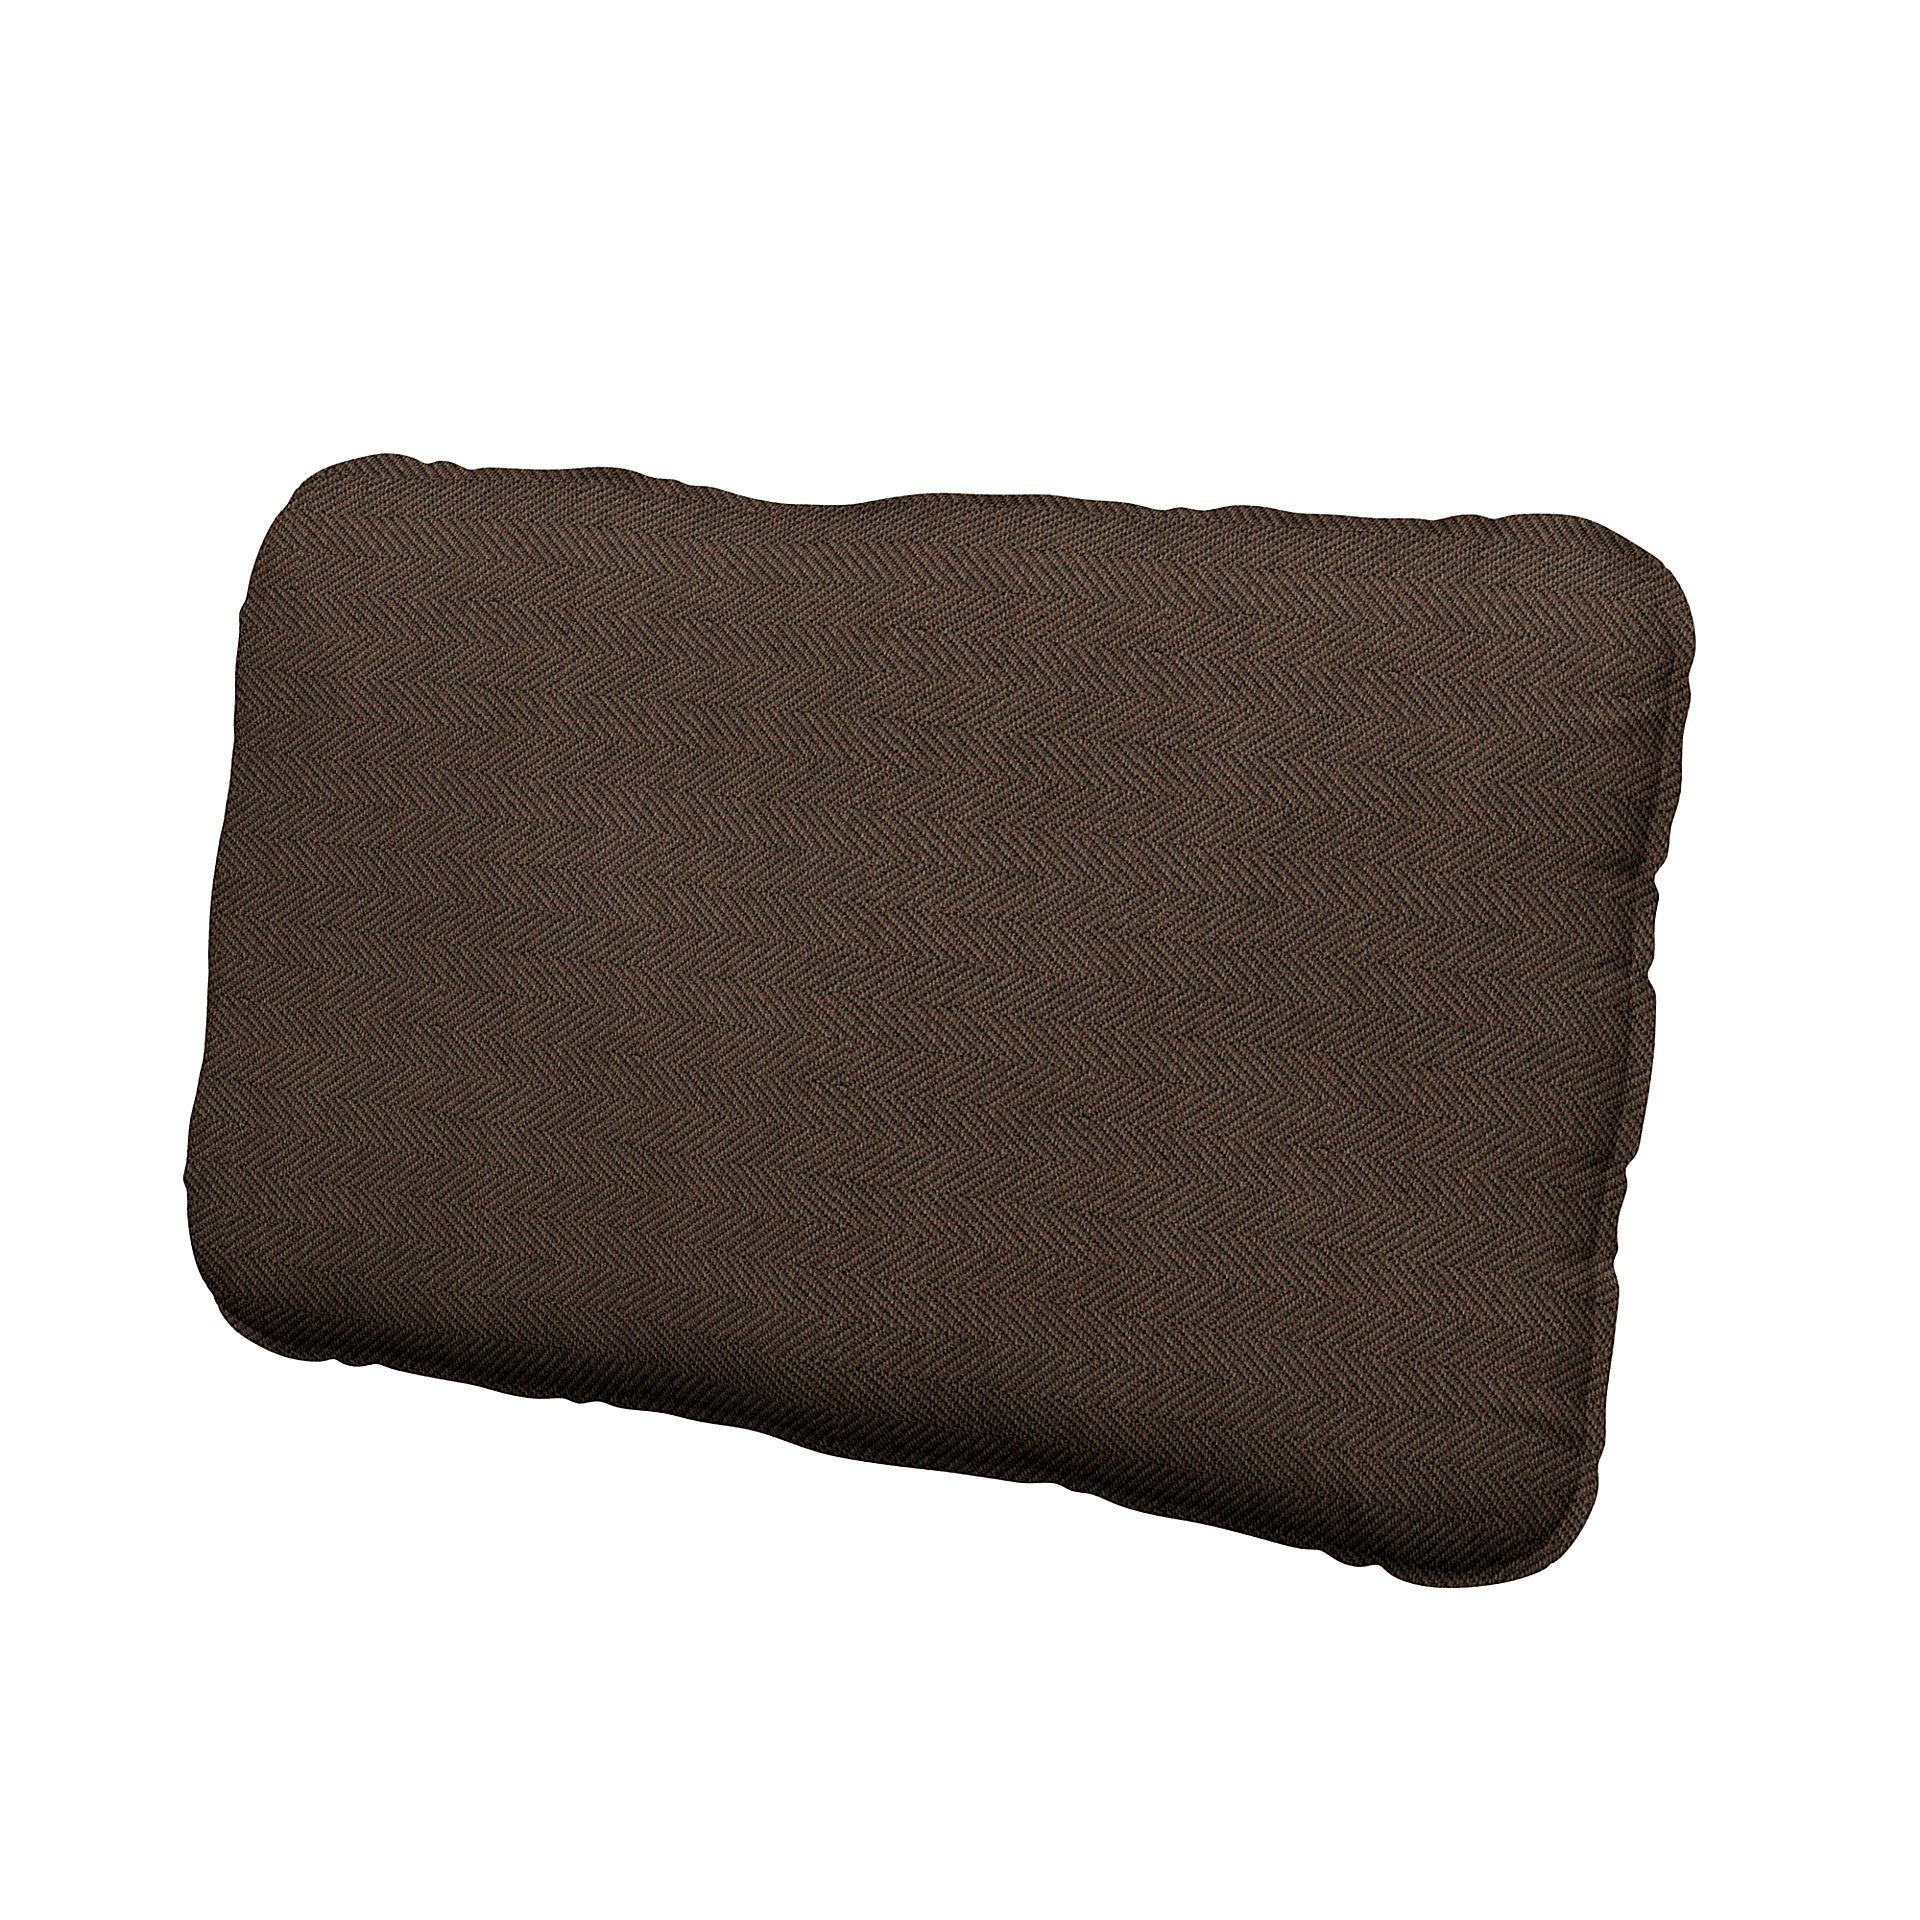 IKEA - Vallentuna back cushion cover 40x75cm, Chocolate, Boucle & Texture - Bemz